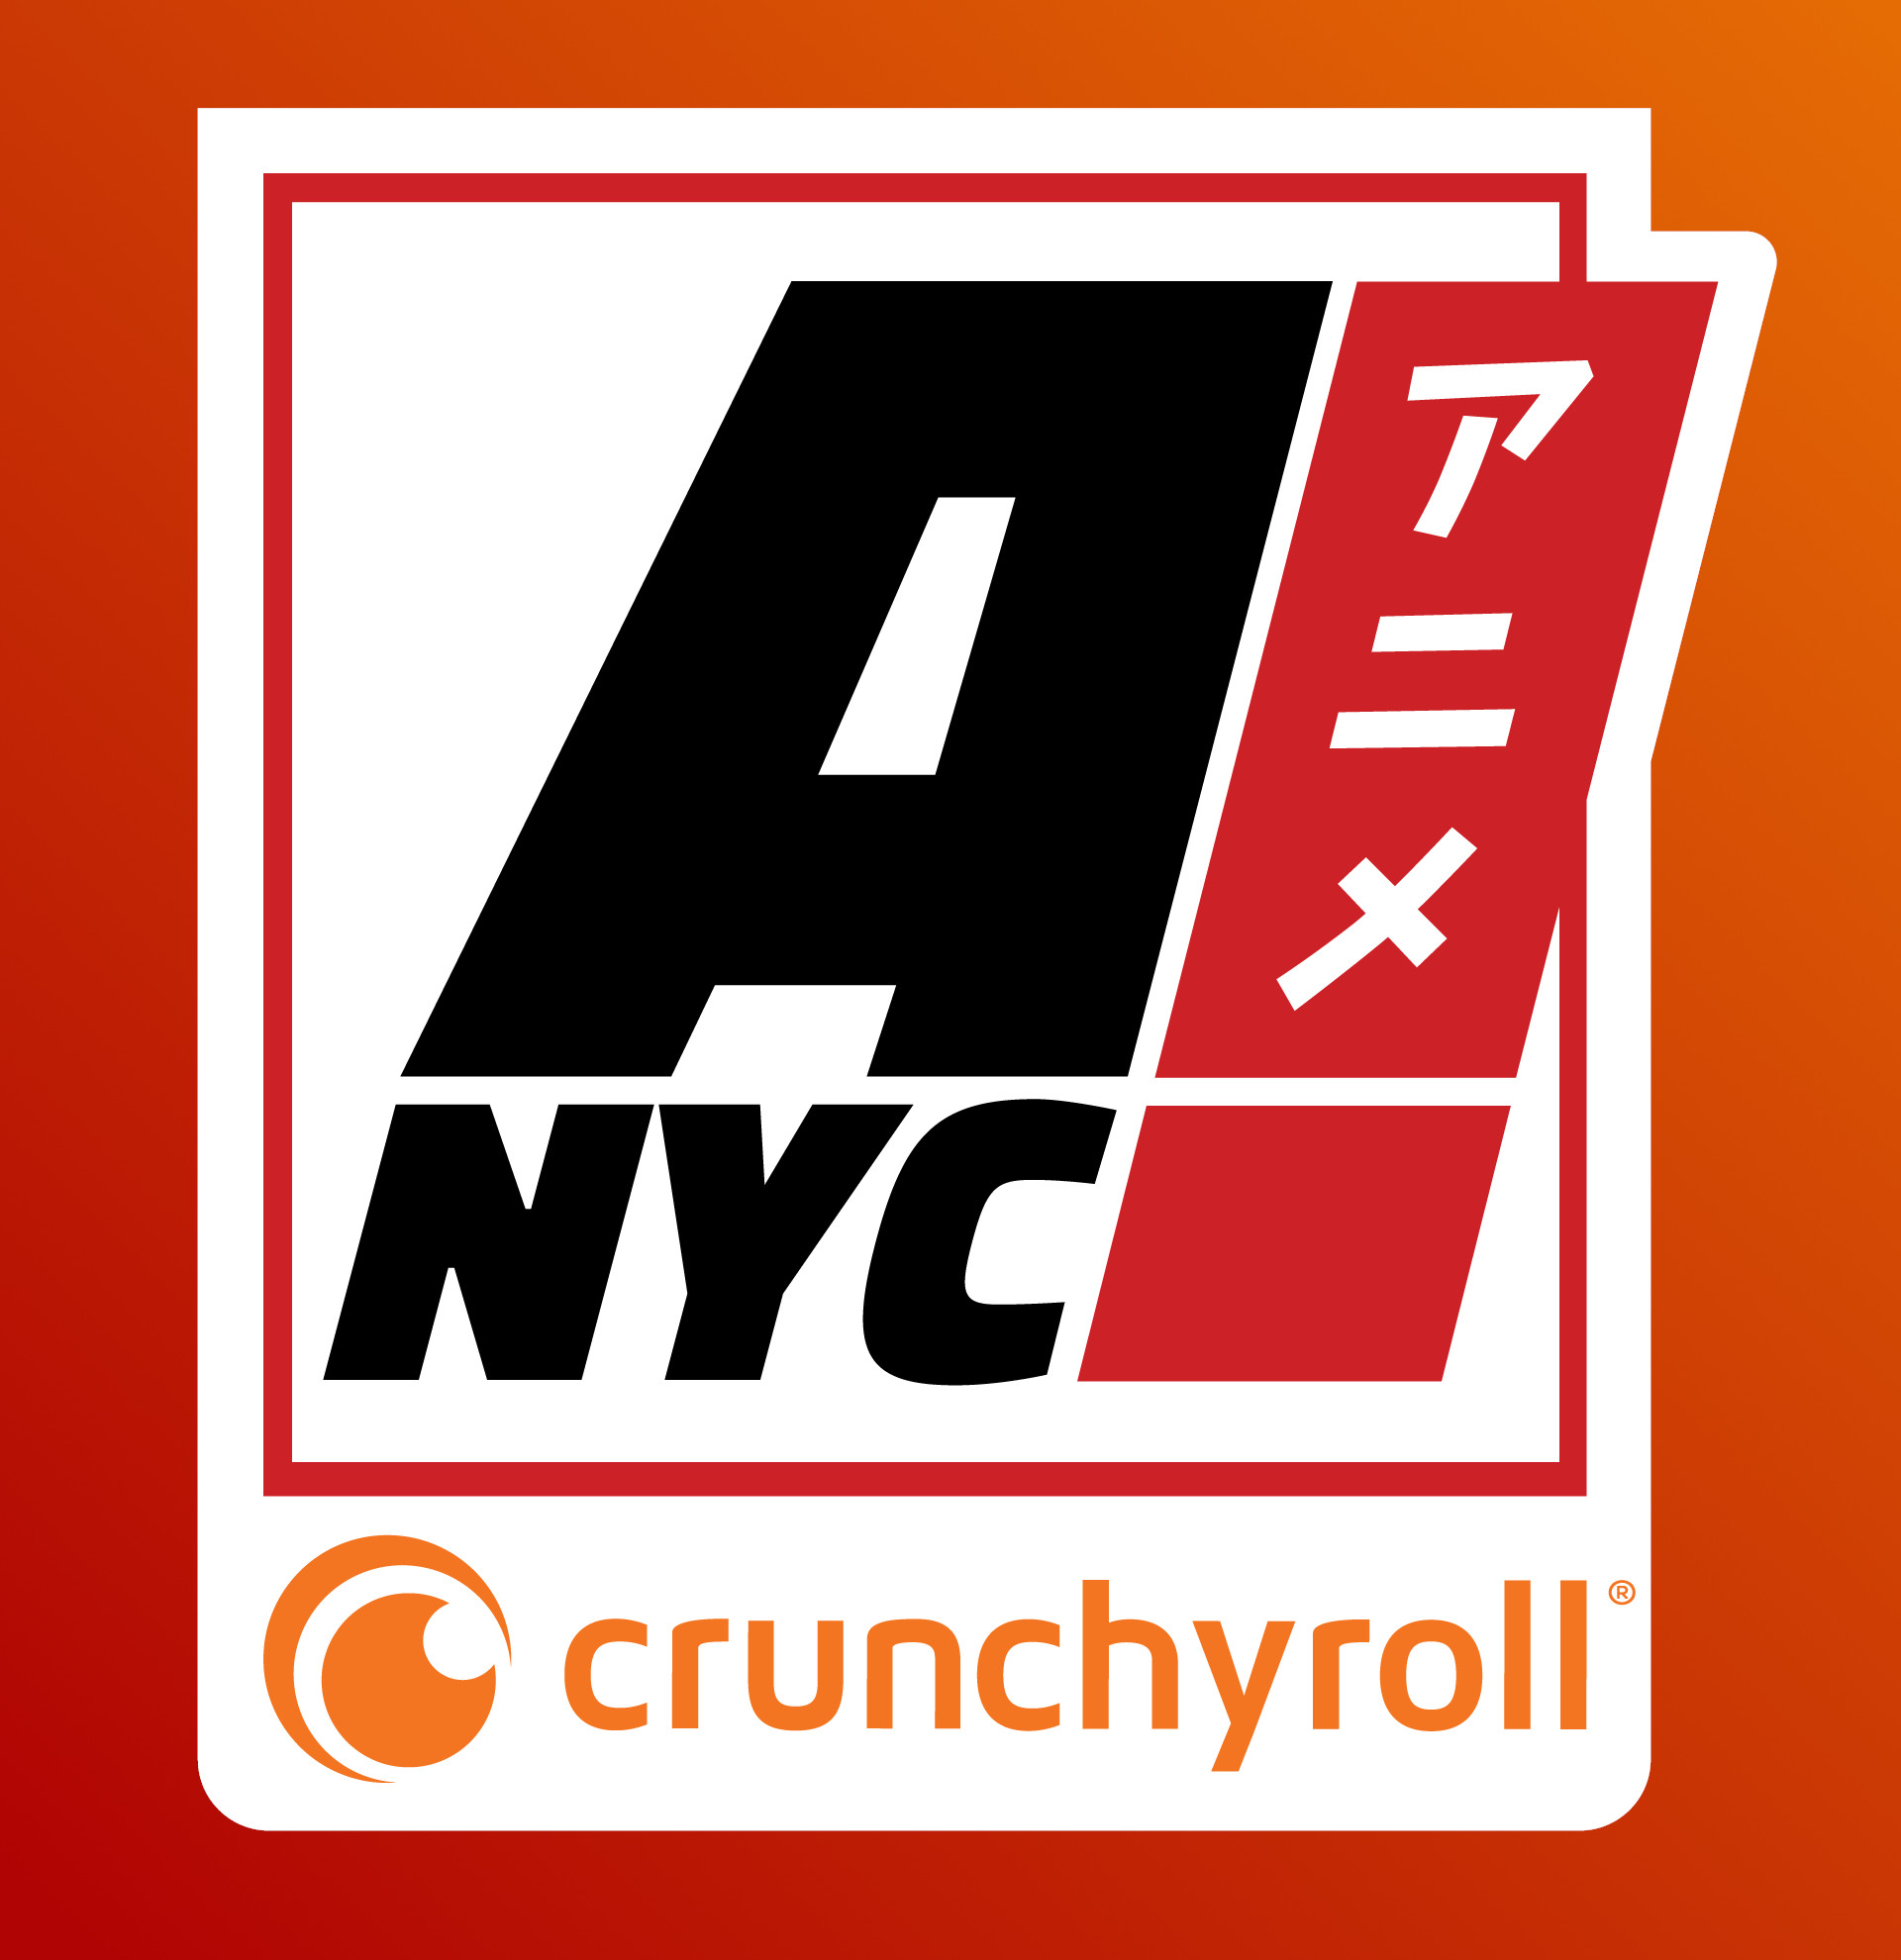 Crunchyroll’s Night of Live Music Featuring Hiroyuki SAWANO Coming To Anime NYC